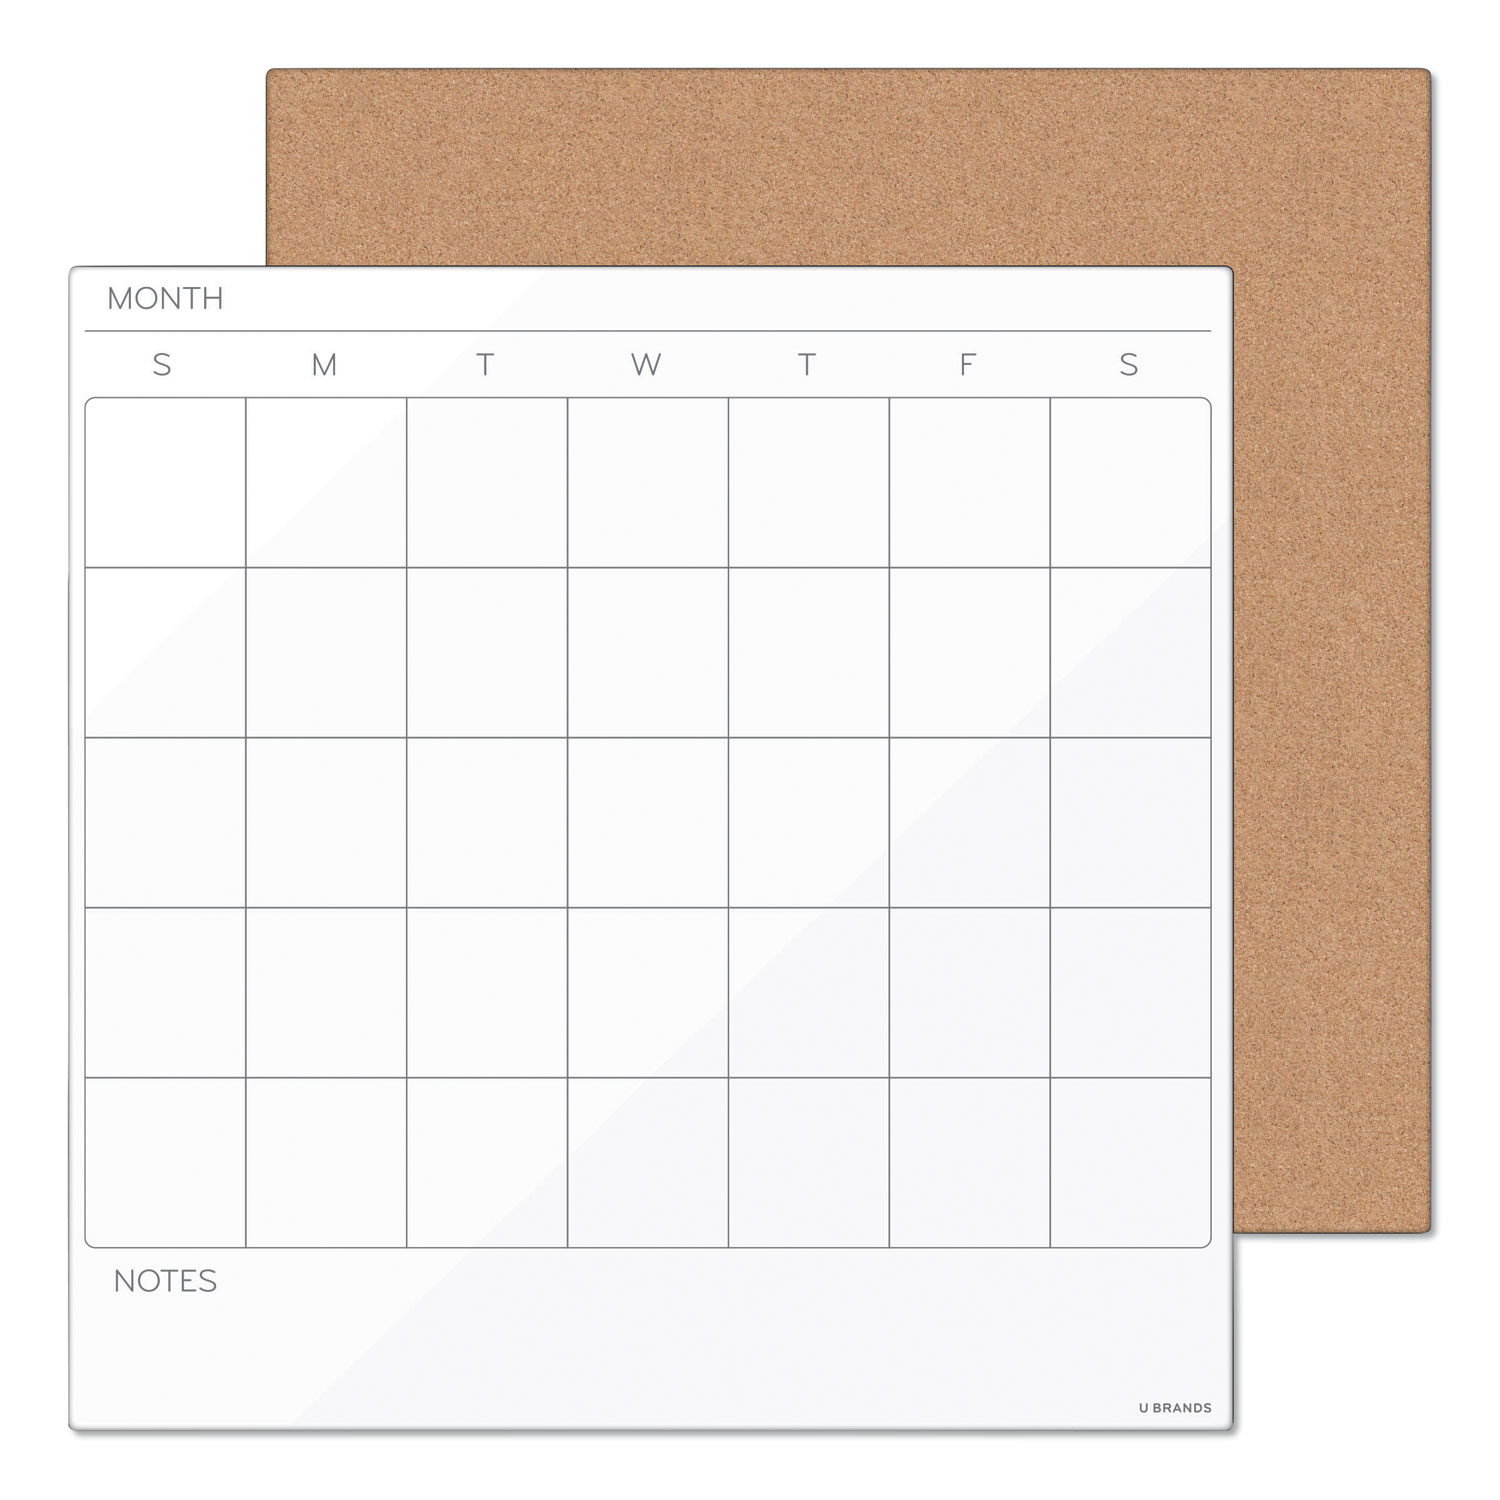  U Brands 3889U00-01 Tile Board Value Pack with Undated One Month Calendar, 14 x 14, White/Natural, 2/Set (UBR3889U0001) 